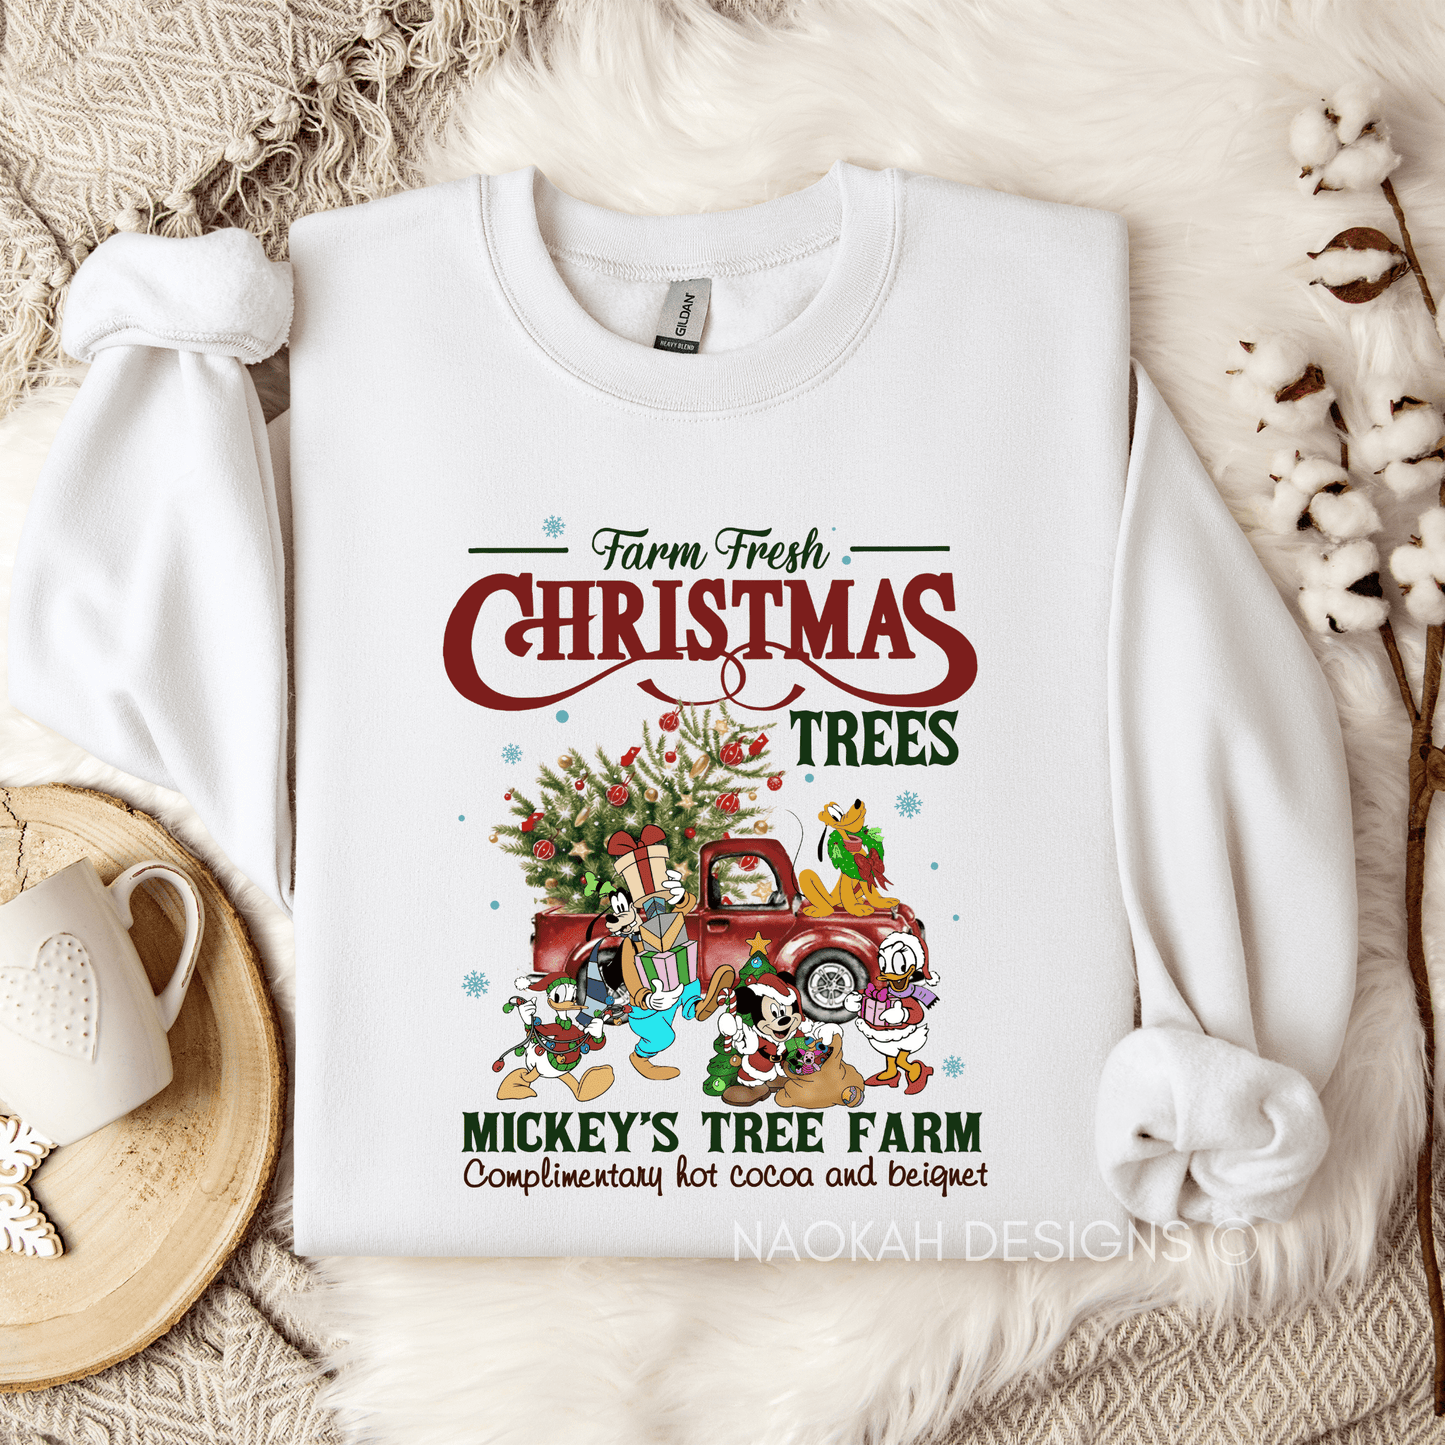 mickey's farm fresh christmas tree farm sweater, farm fresh christmas trees sweater, mickey's vintage tree farm sweater, mickey and friends christmas sweater